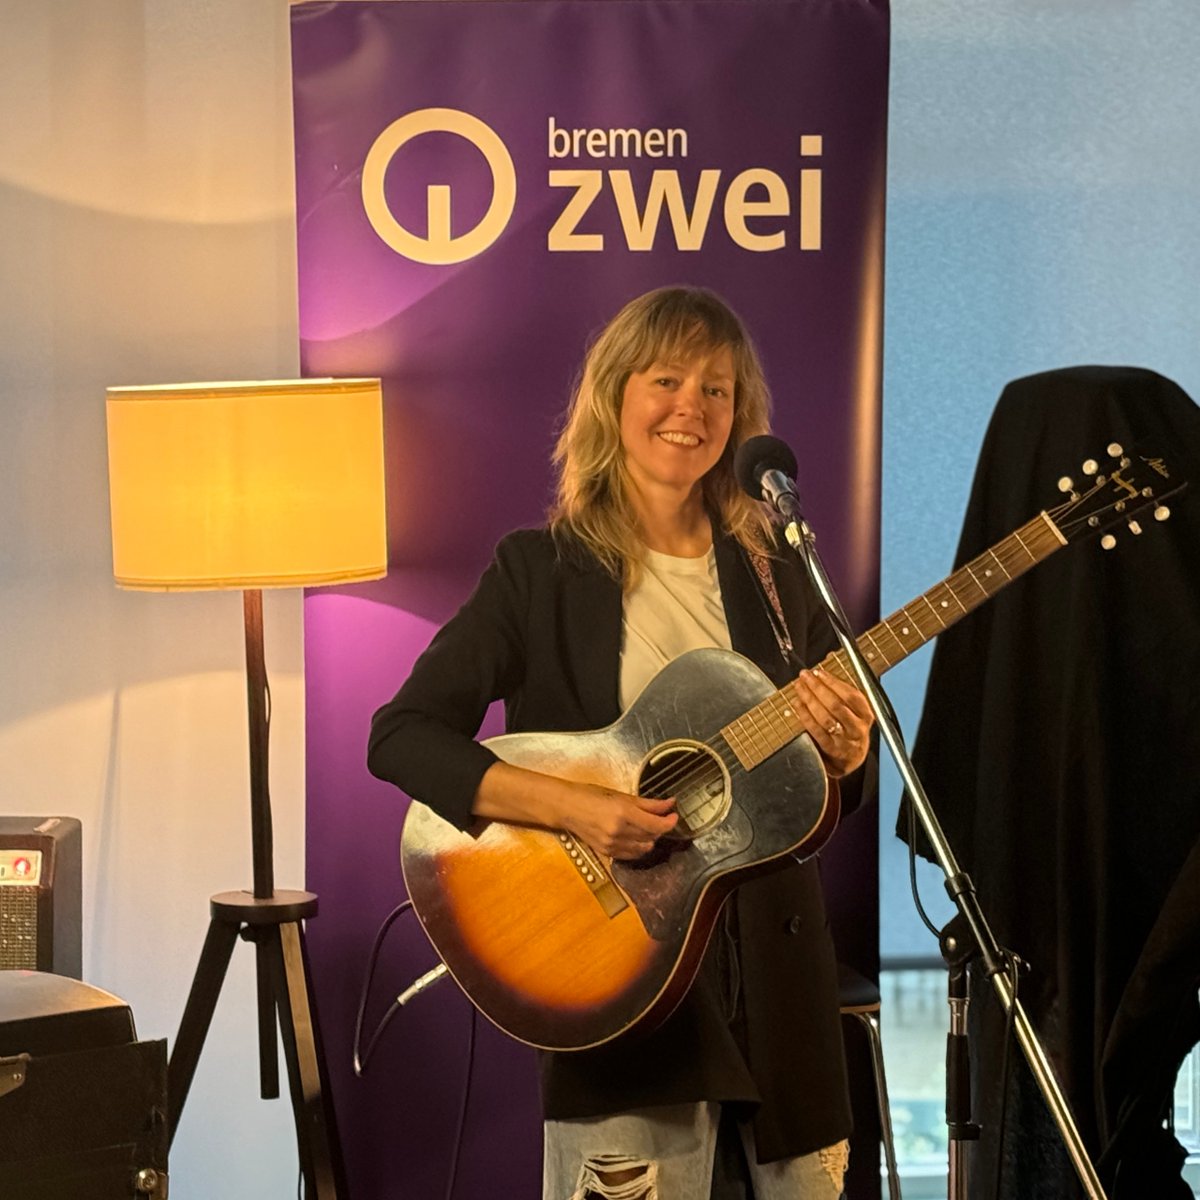 Dankeschön to Bremen Zwei Radio for this fun session / concert at the station! bremenzwei.de/audios/radiose… 💛 Emily